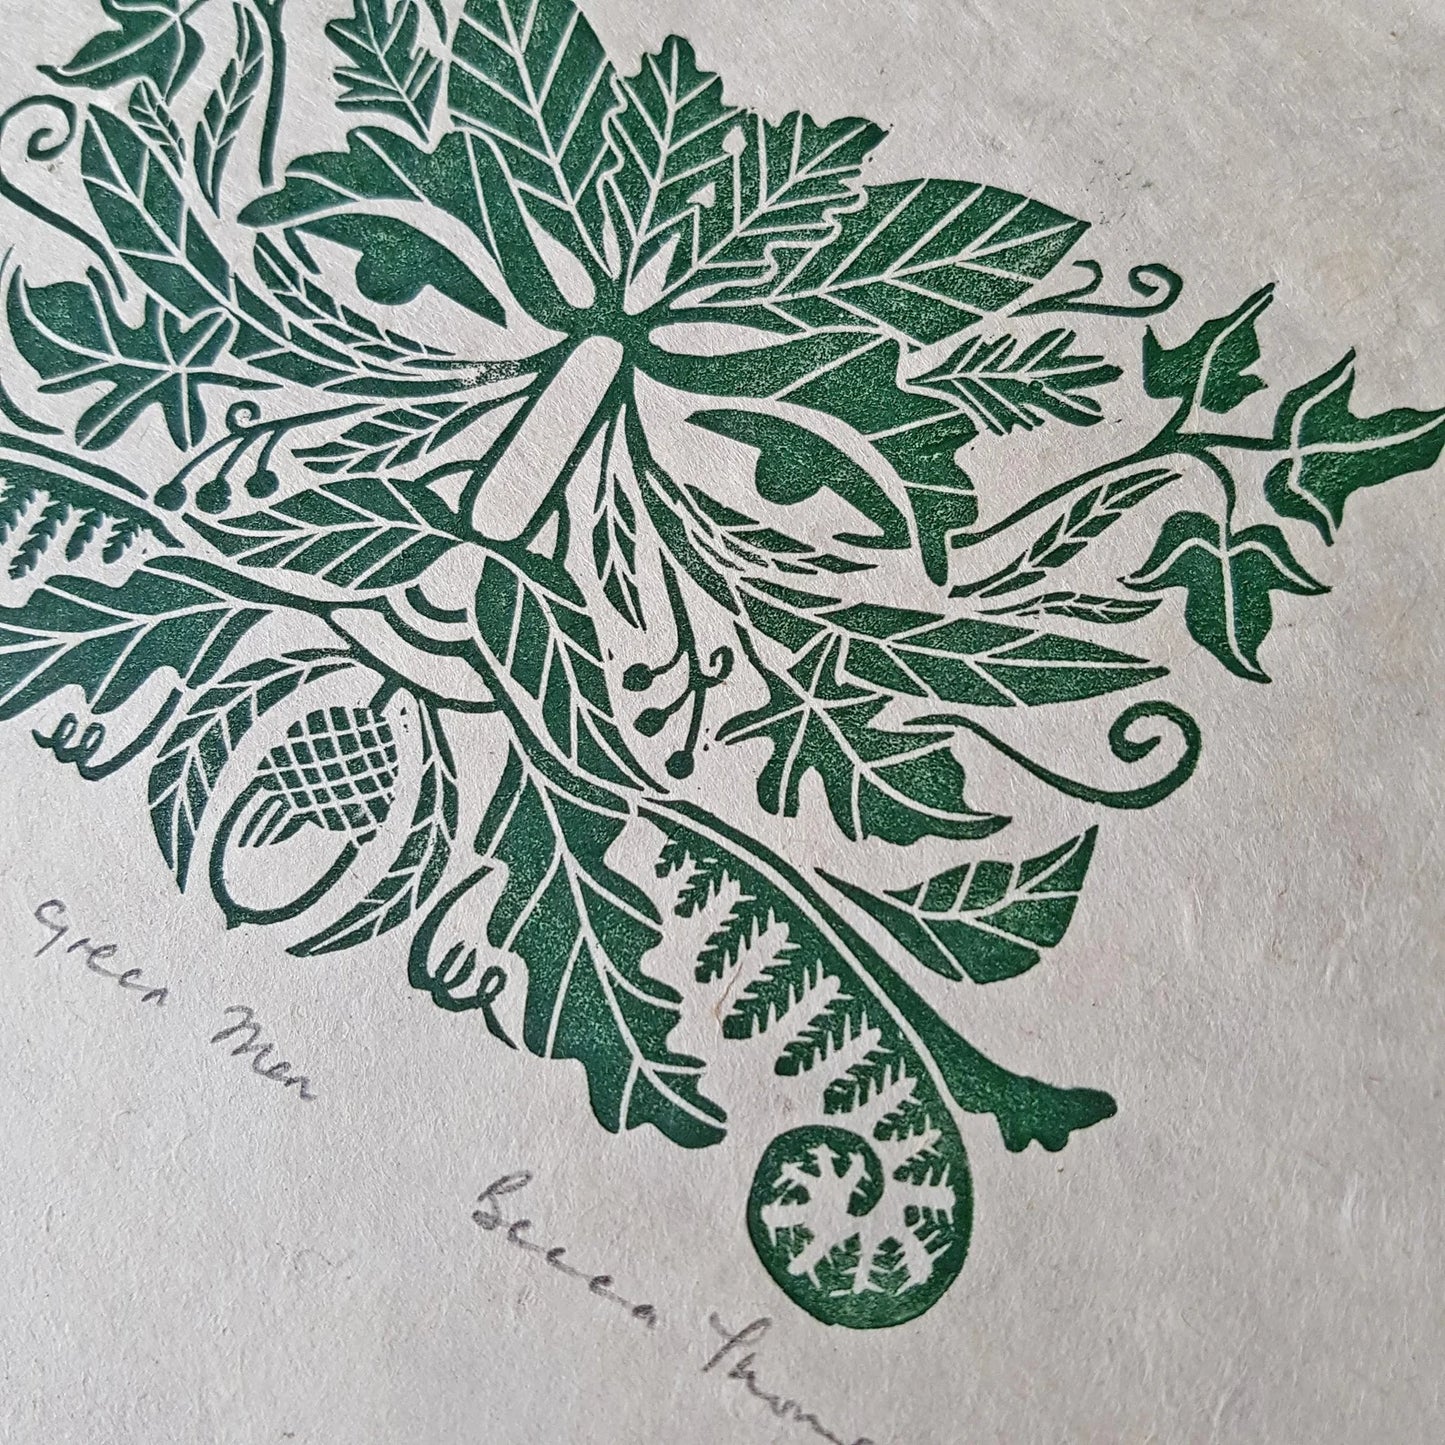 Green Man Original Linocut Print